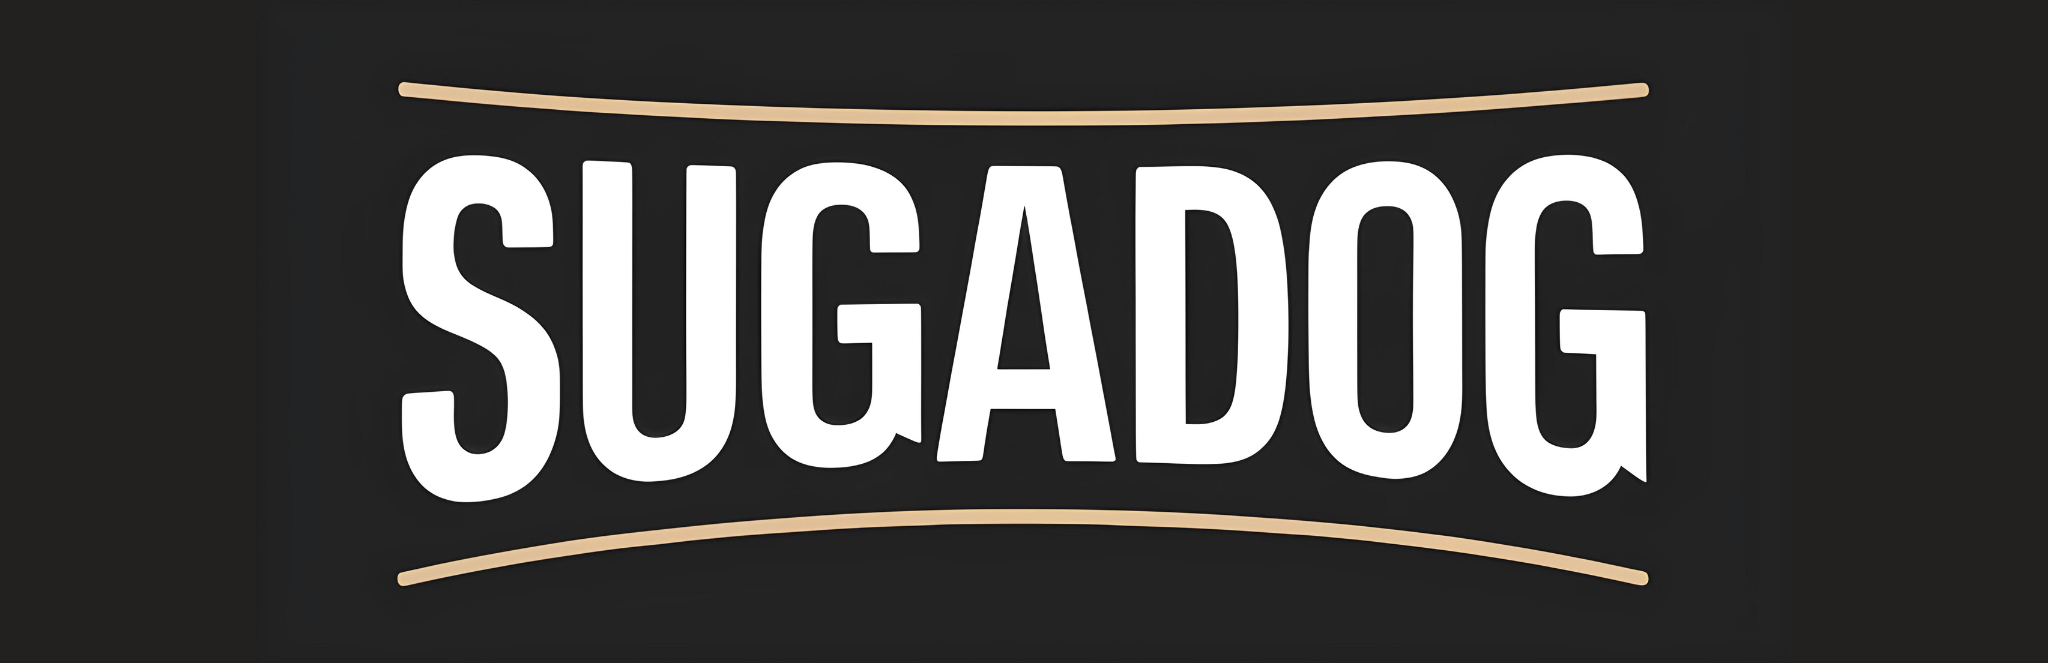 Sugadog Banner Logo